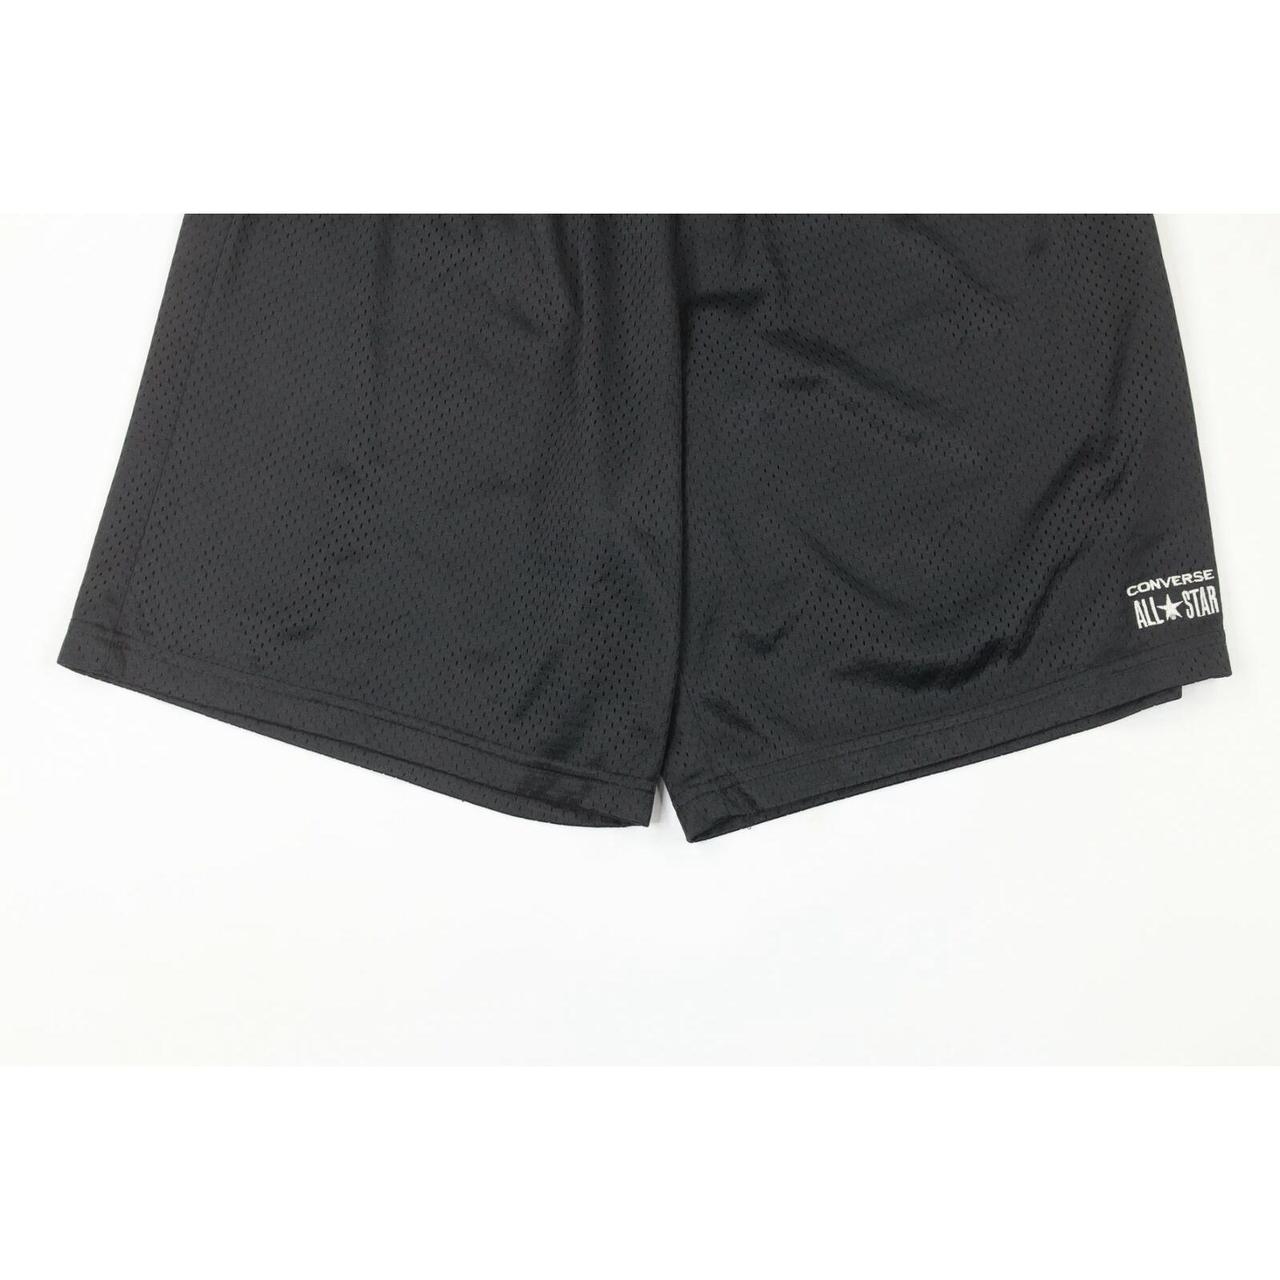 Converse Men's Black Shorts (3)